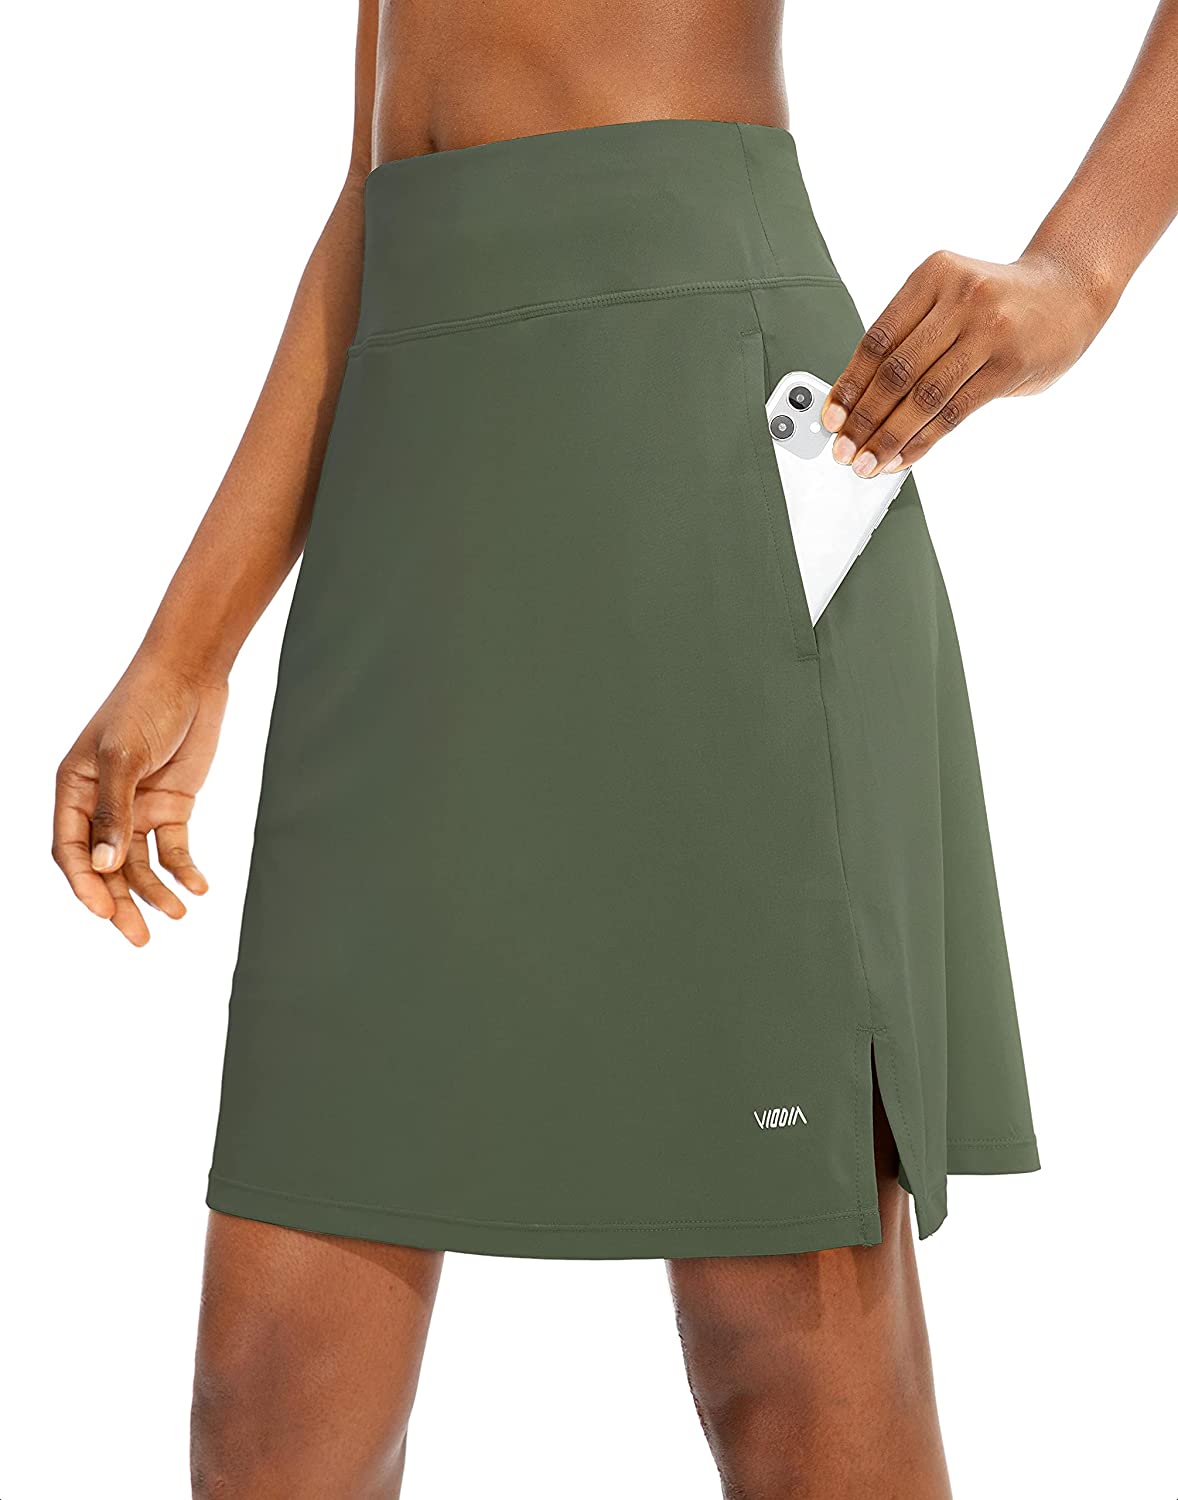 Viodia Women's 20 Knee Length Skorts Skirts UPF50+ Athletic Tennis Golf  Skirt f